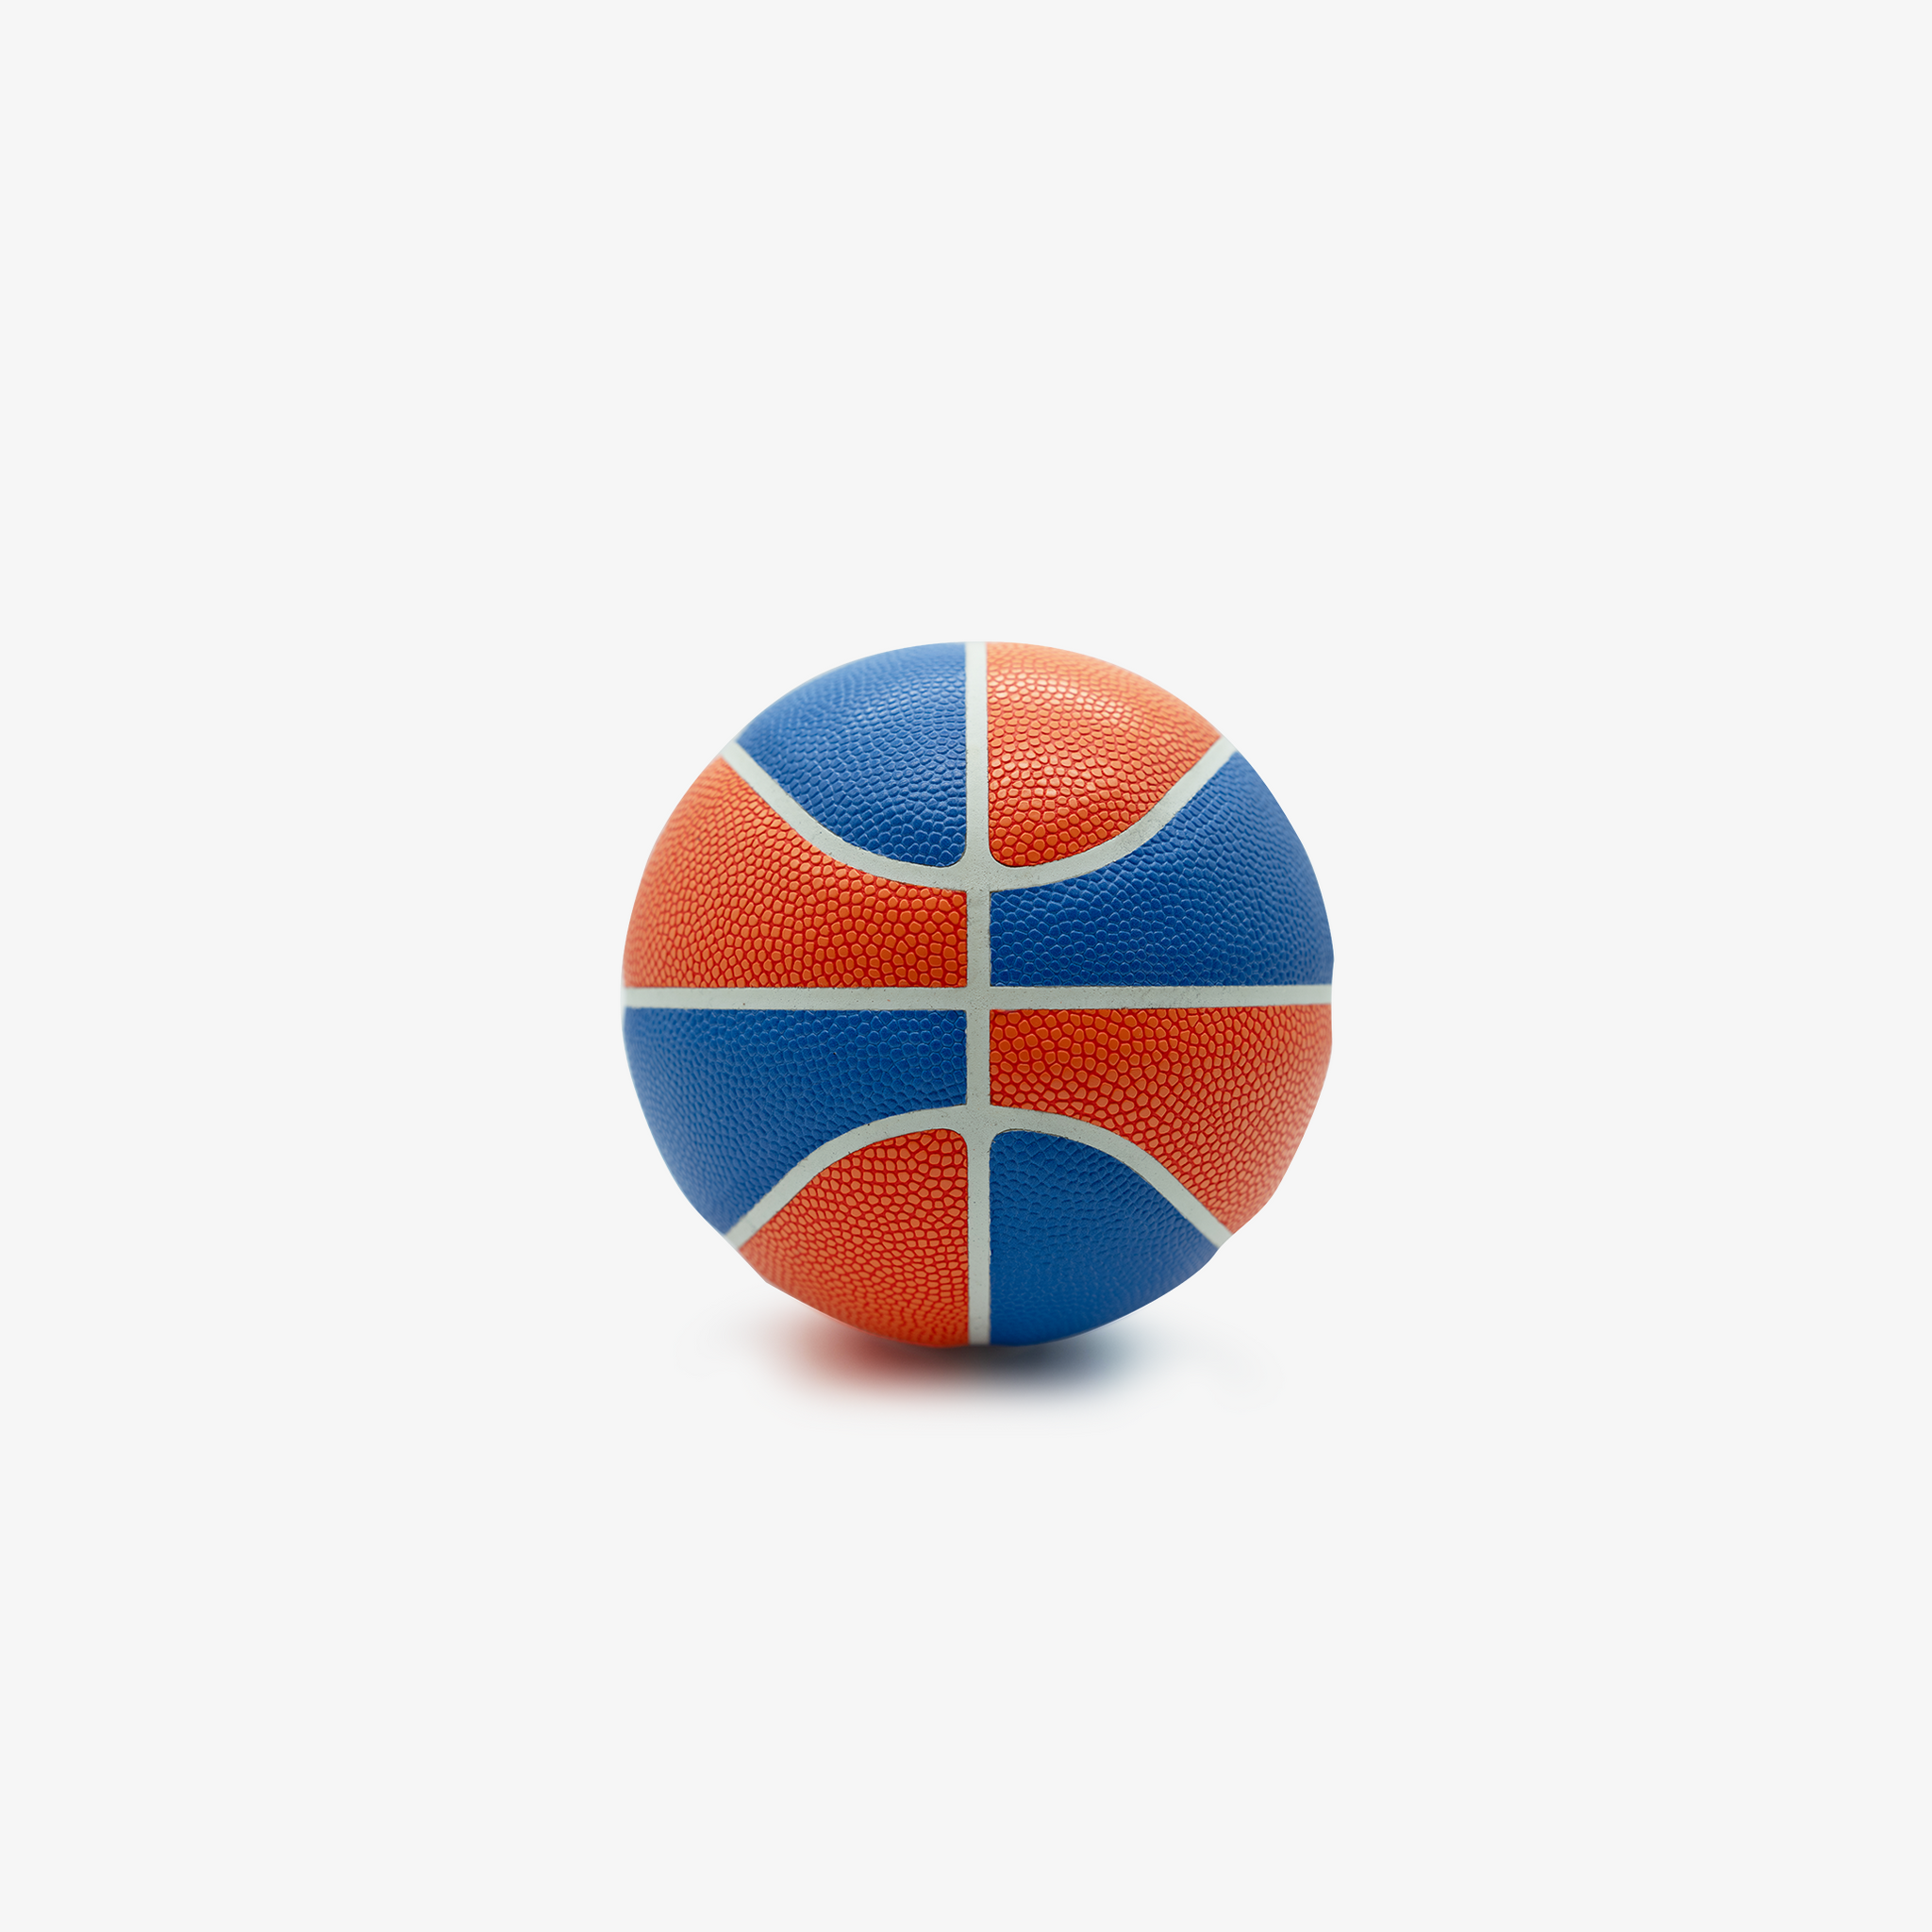 Mini New York City Basketball